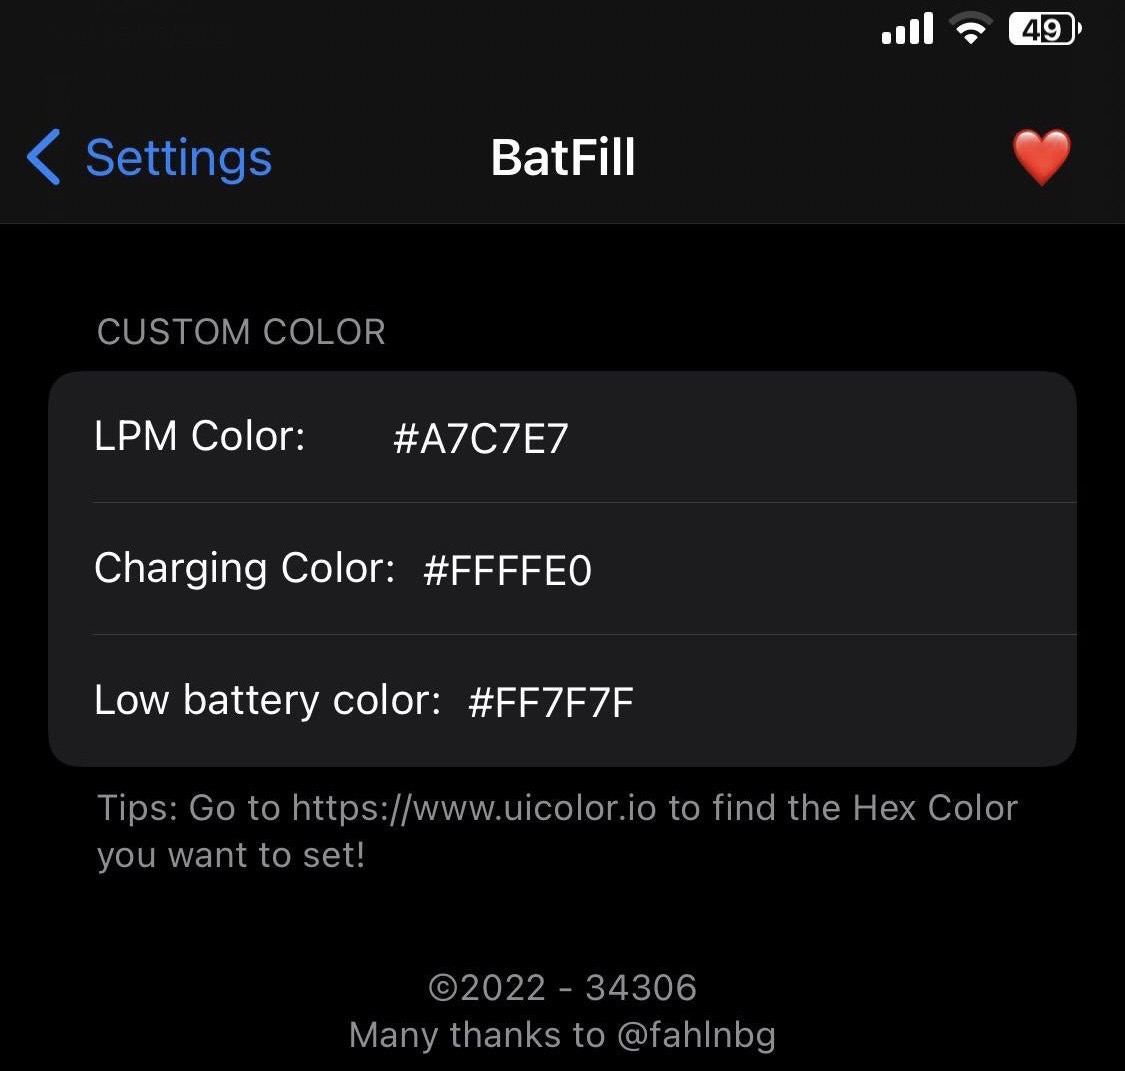 New BatFill tweak brings iOS 16.1’s battery level indicator to jailbroken devices